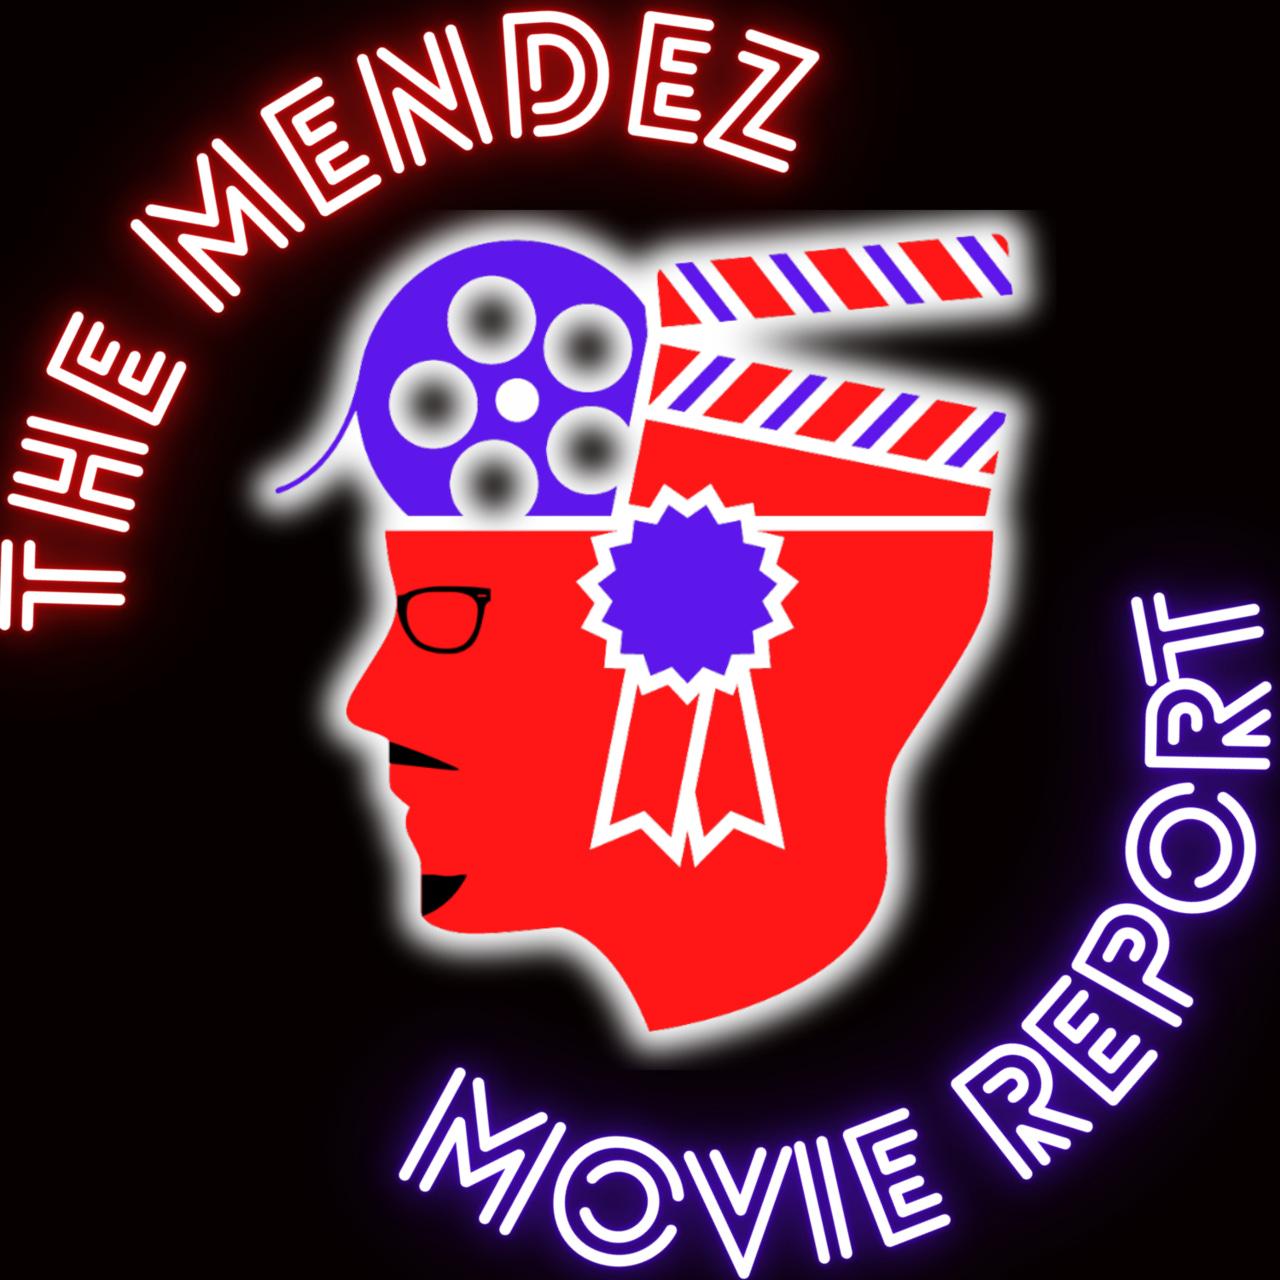 The Mendez Movie Report